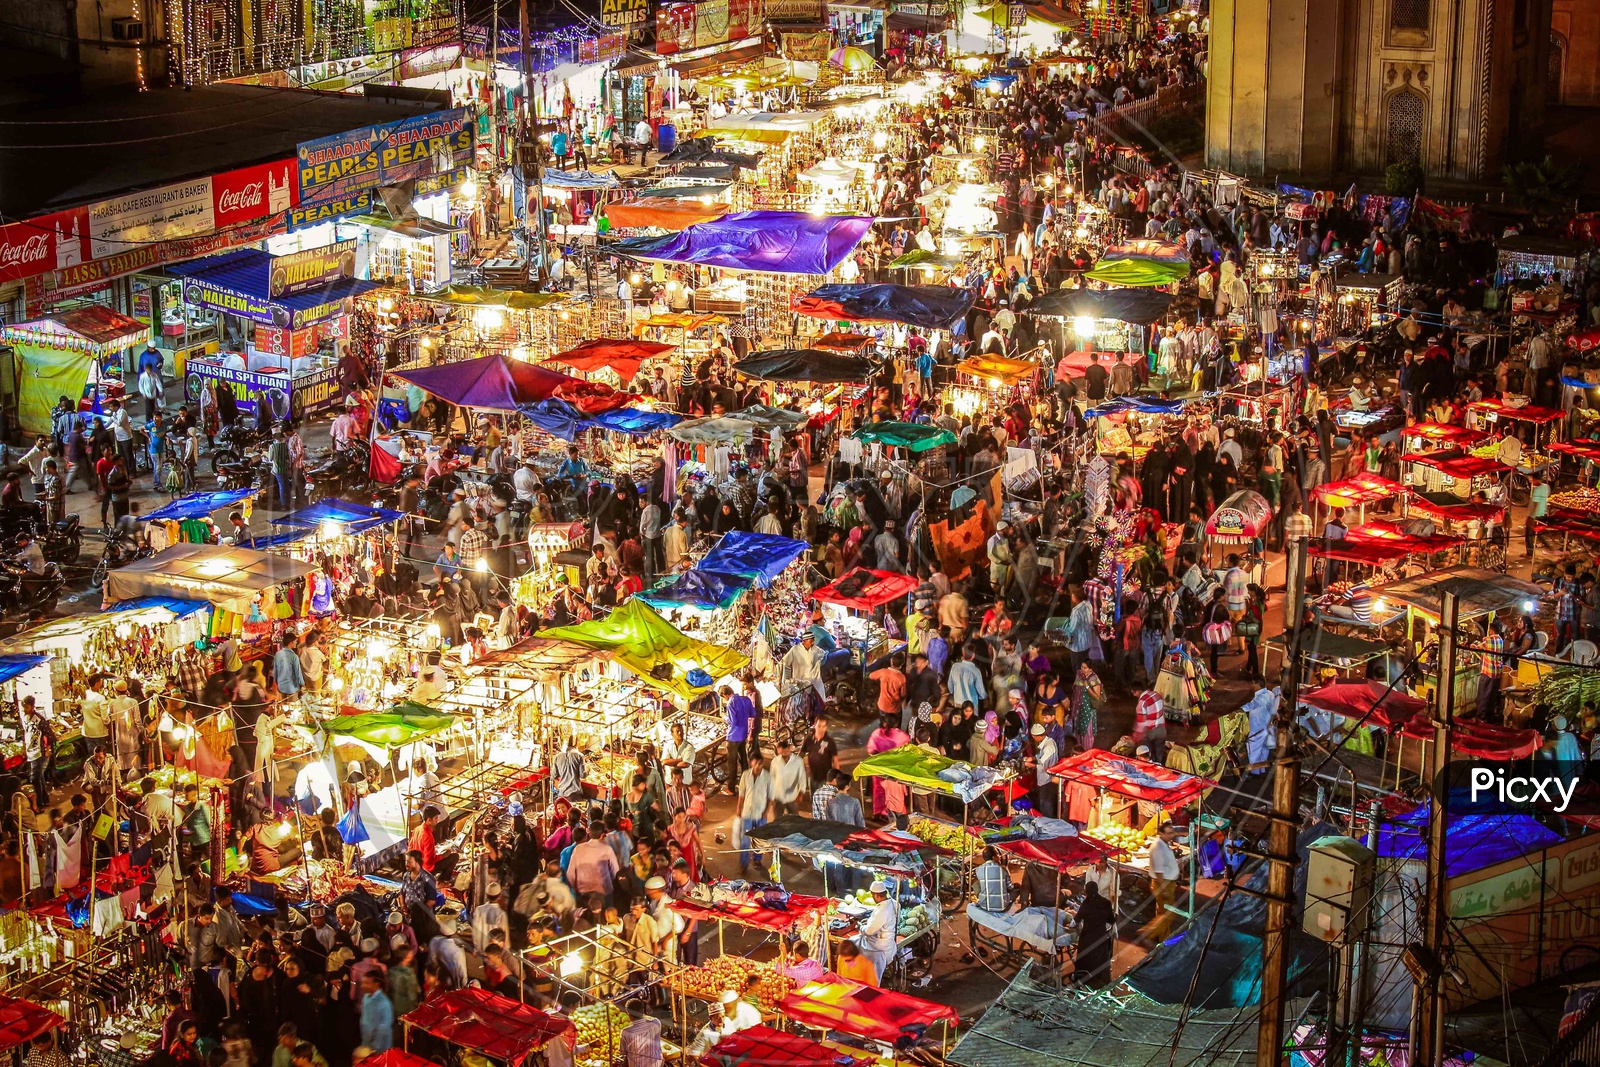 Street bazaar crowd during the night